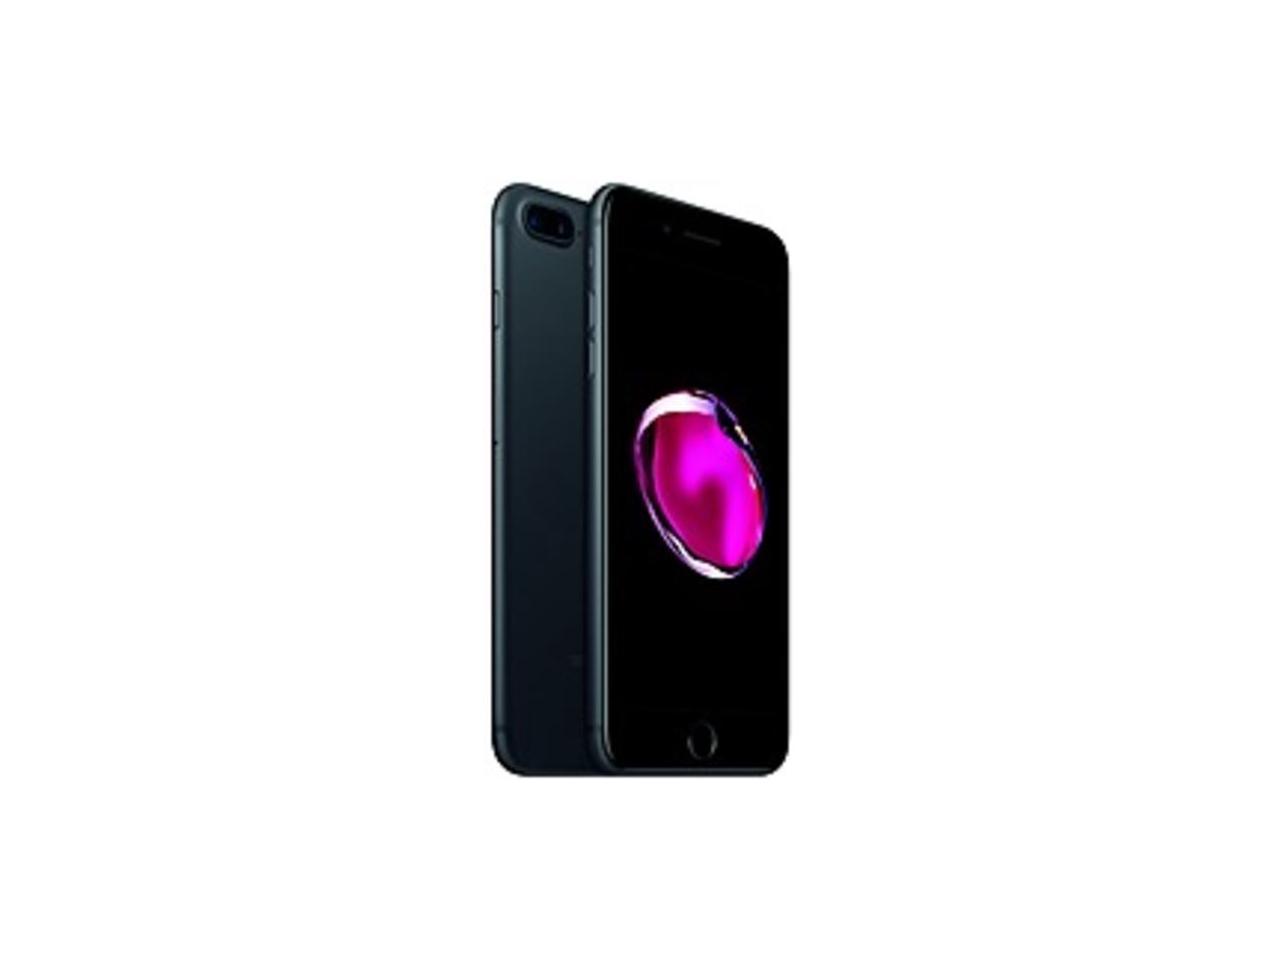 Apple iPhone 7 Plus 32GB Verizon Black MNR12LL/A - Newegg.com